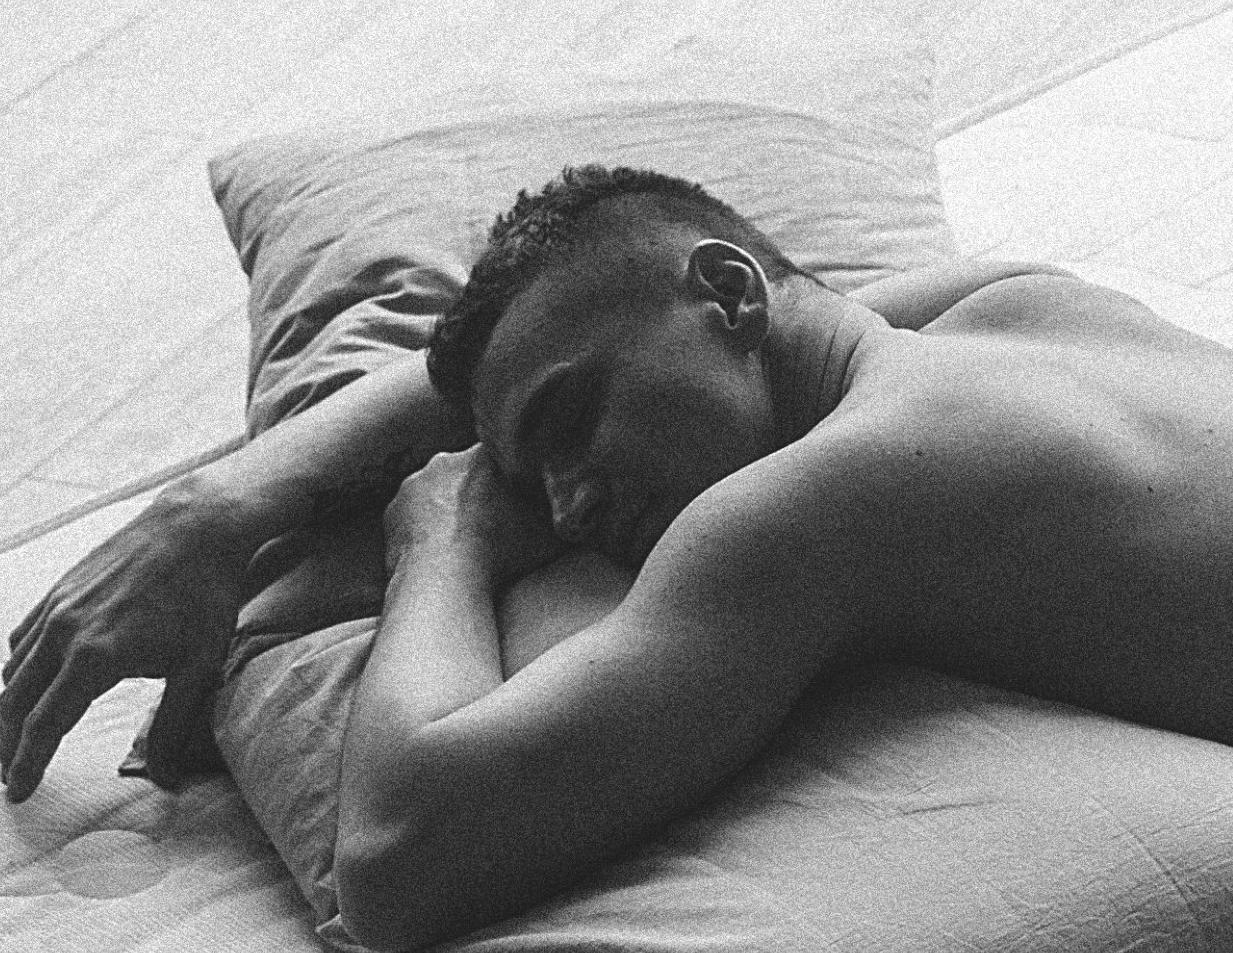 Goshen, Boy on Bed (Seductive youth splayed across mattress) - Print by Sergey Vinogradov